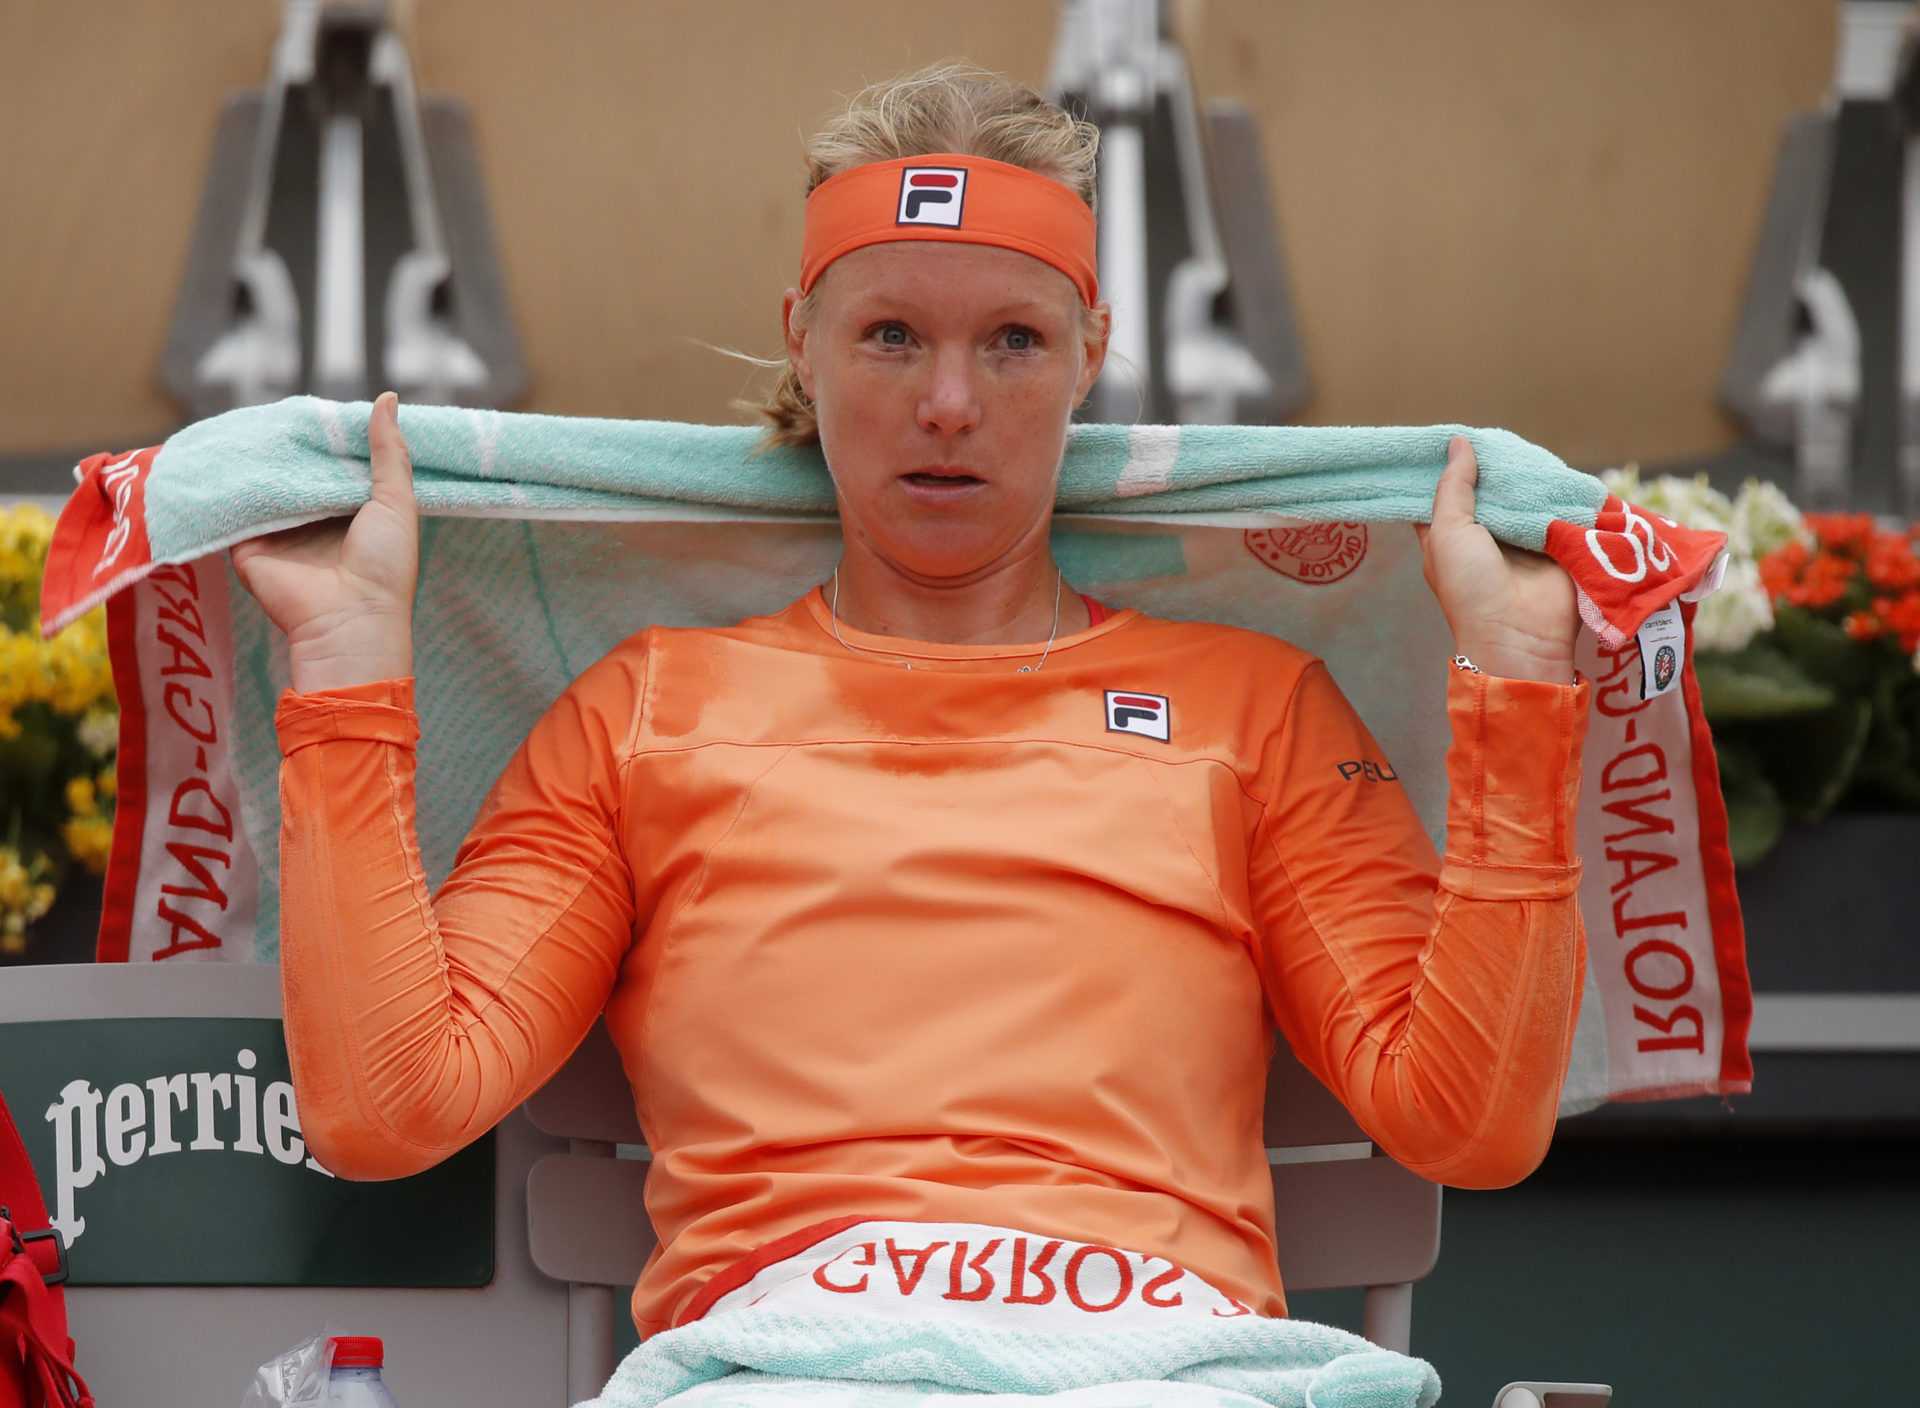 REGARDER: Kiki Bertens en larmes après un match dramatique contre Sara Errani à Roland-Garros 2020